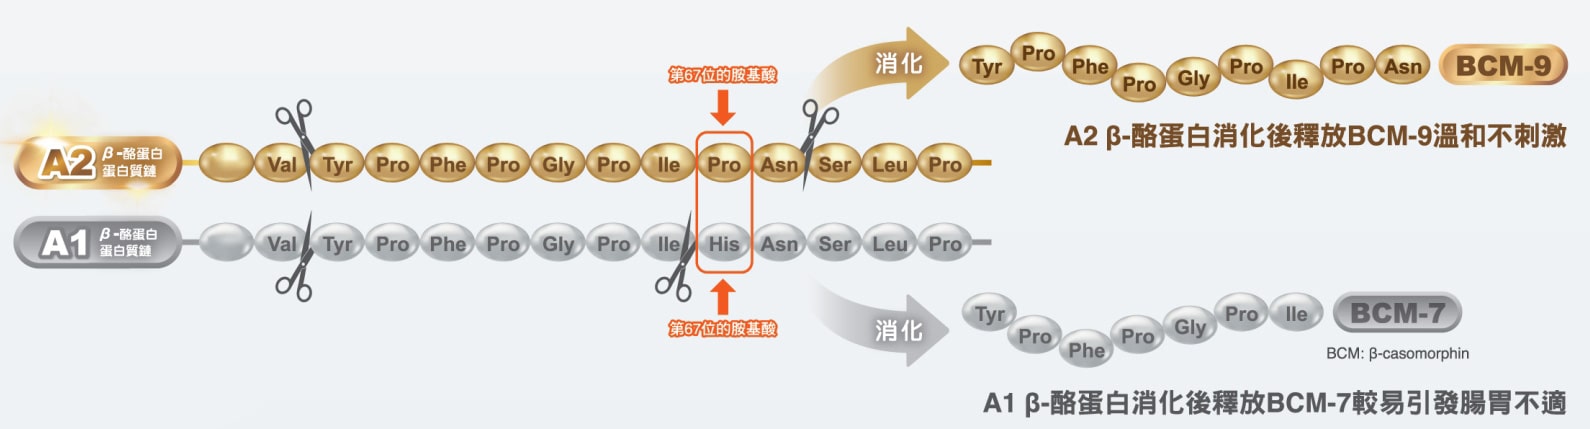 A2 β-酪蛋白消化過程親和人體